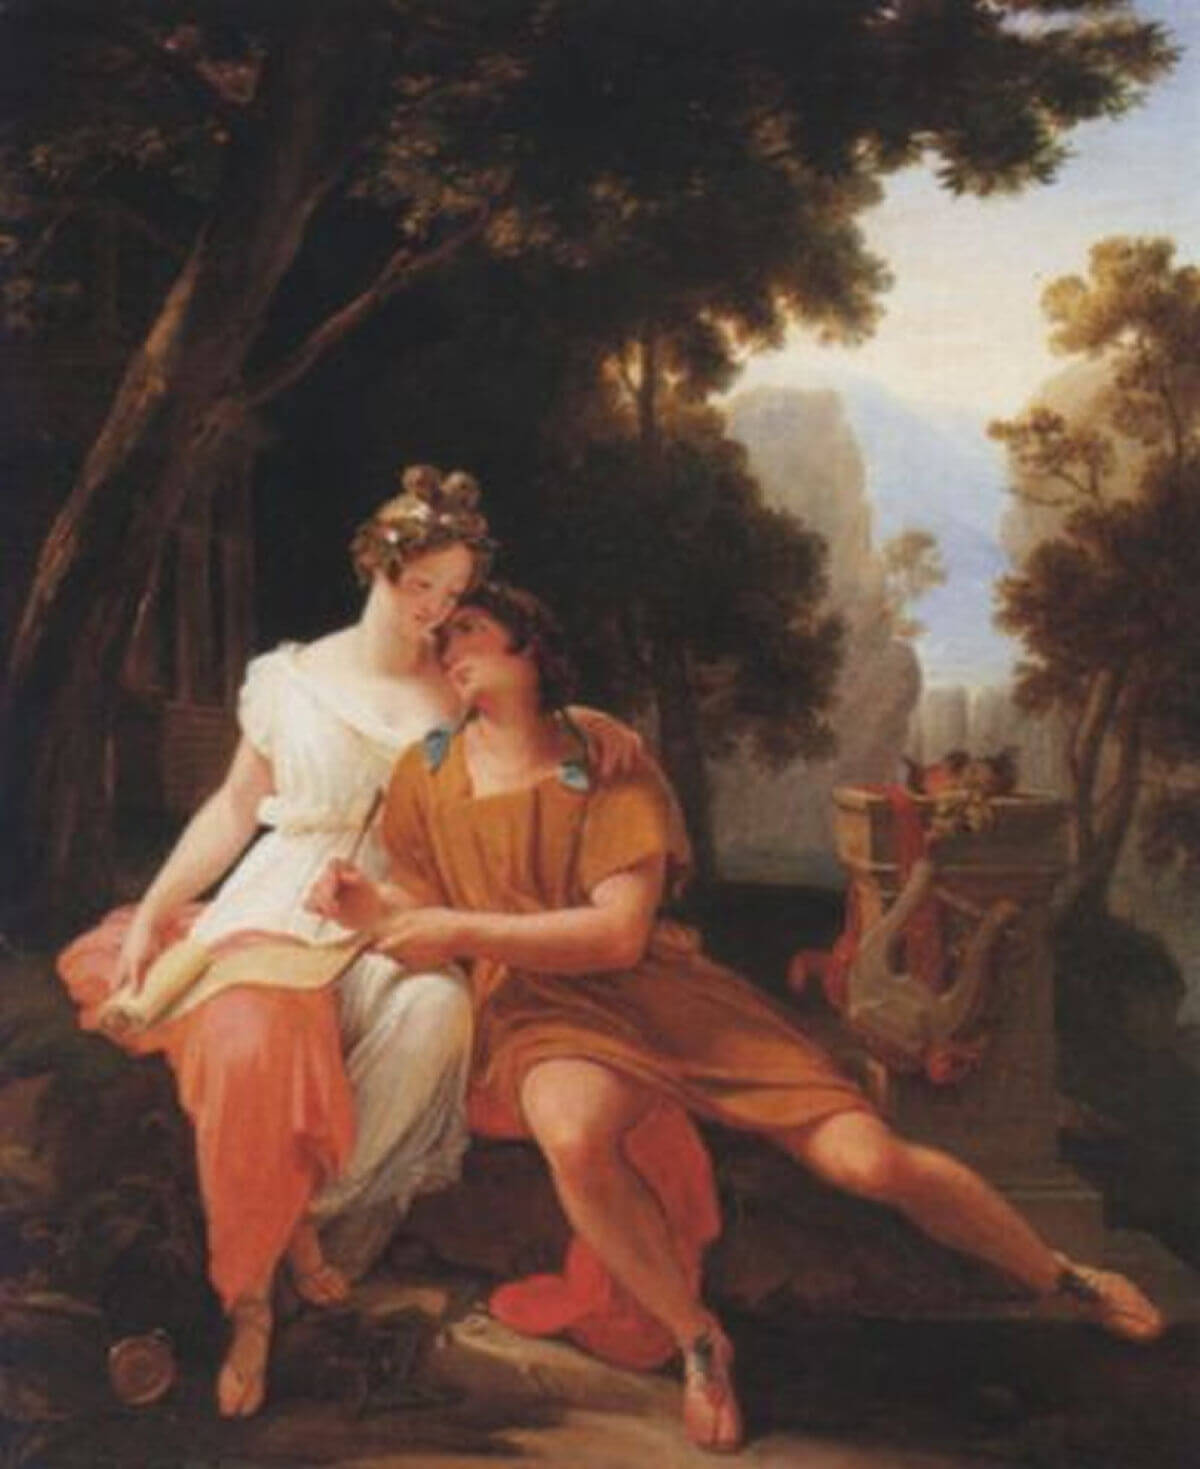 Propertius and Cynthia at Tivoli by Auguste Vinchon